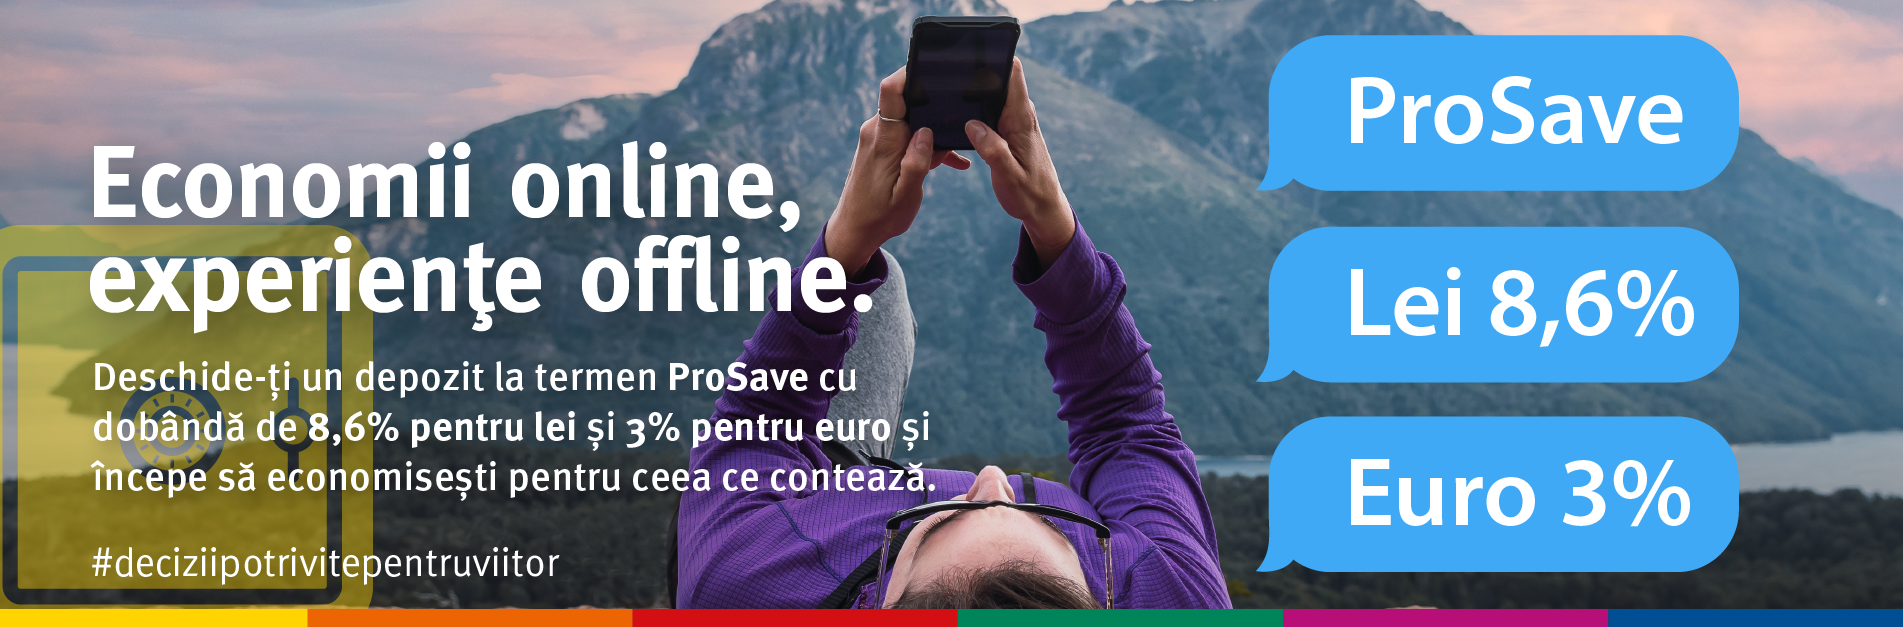 Campanie ProSave